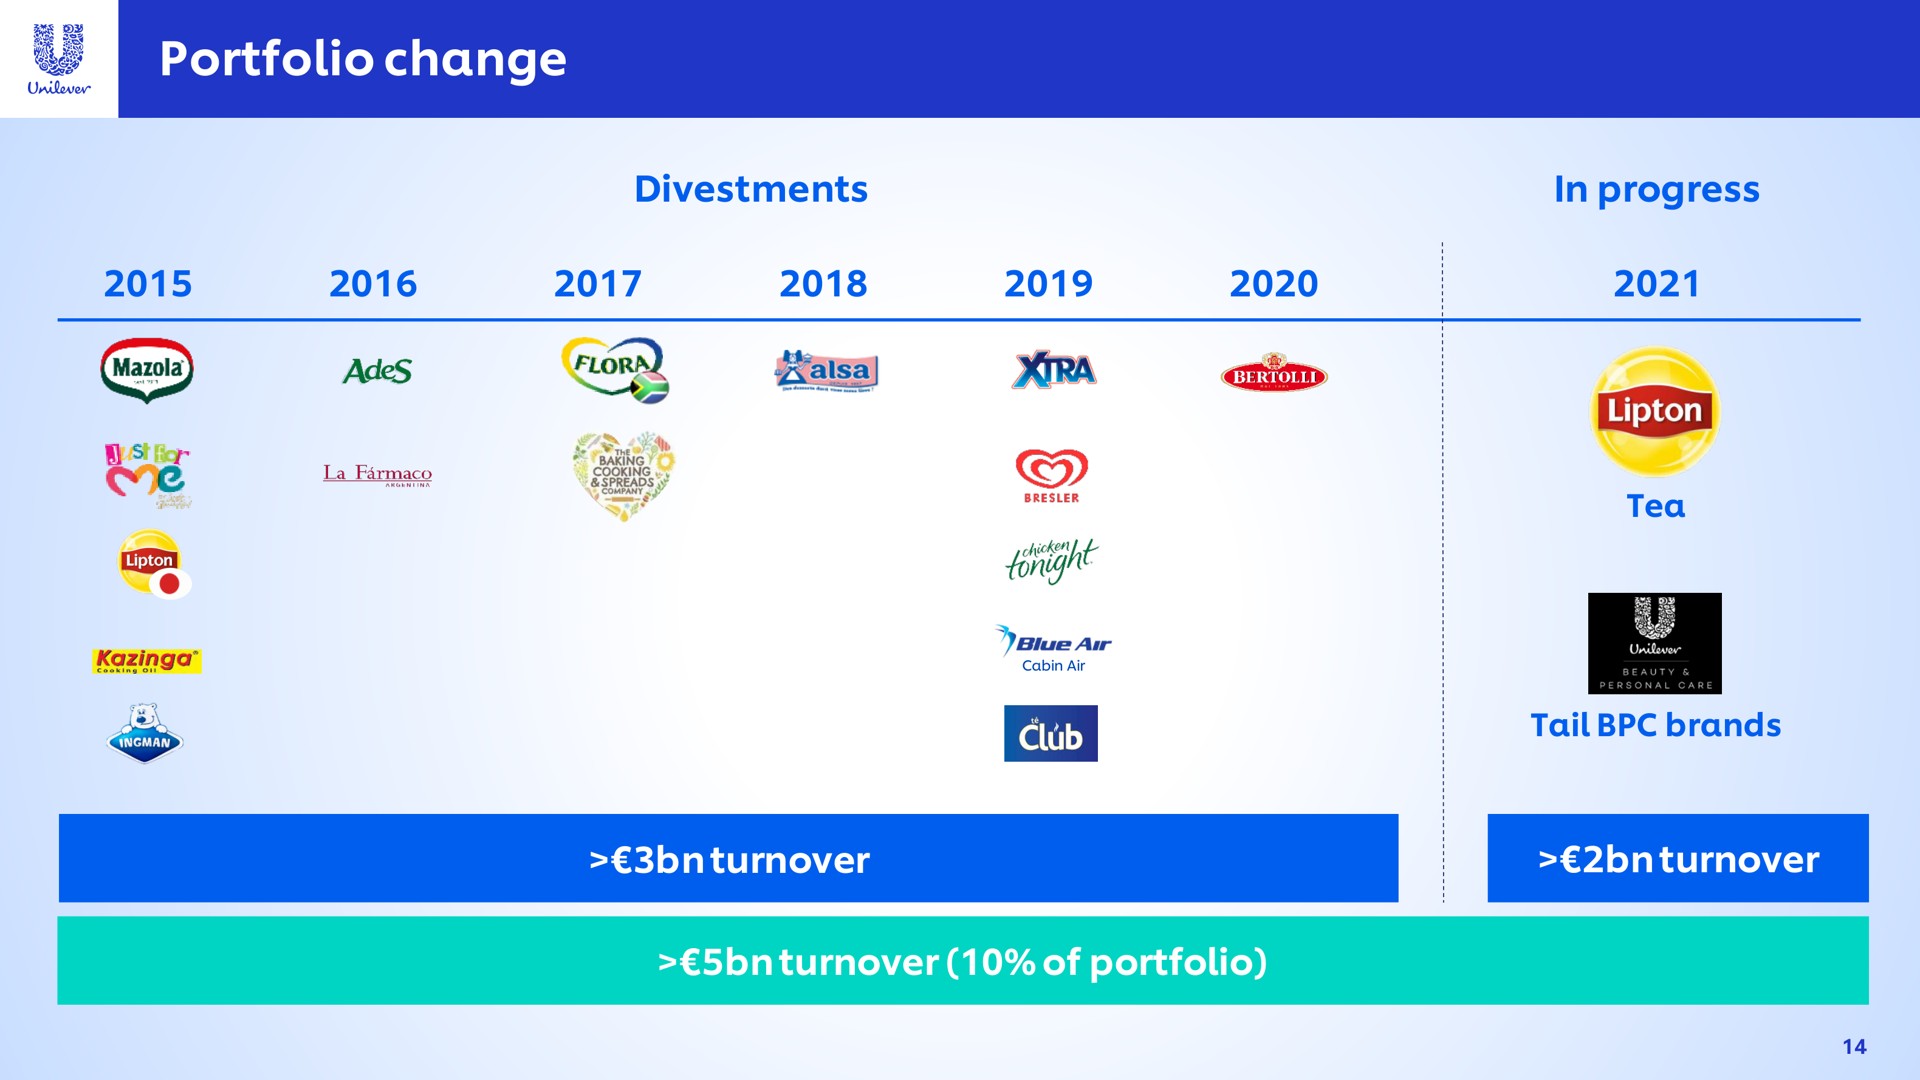 portfolio change a turnover turnover of tail brands turnover | Unilever